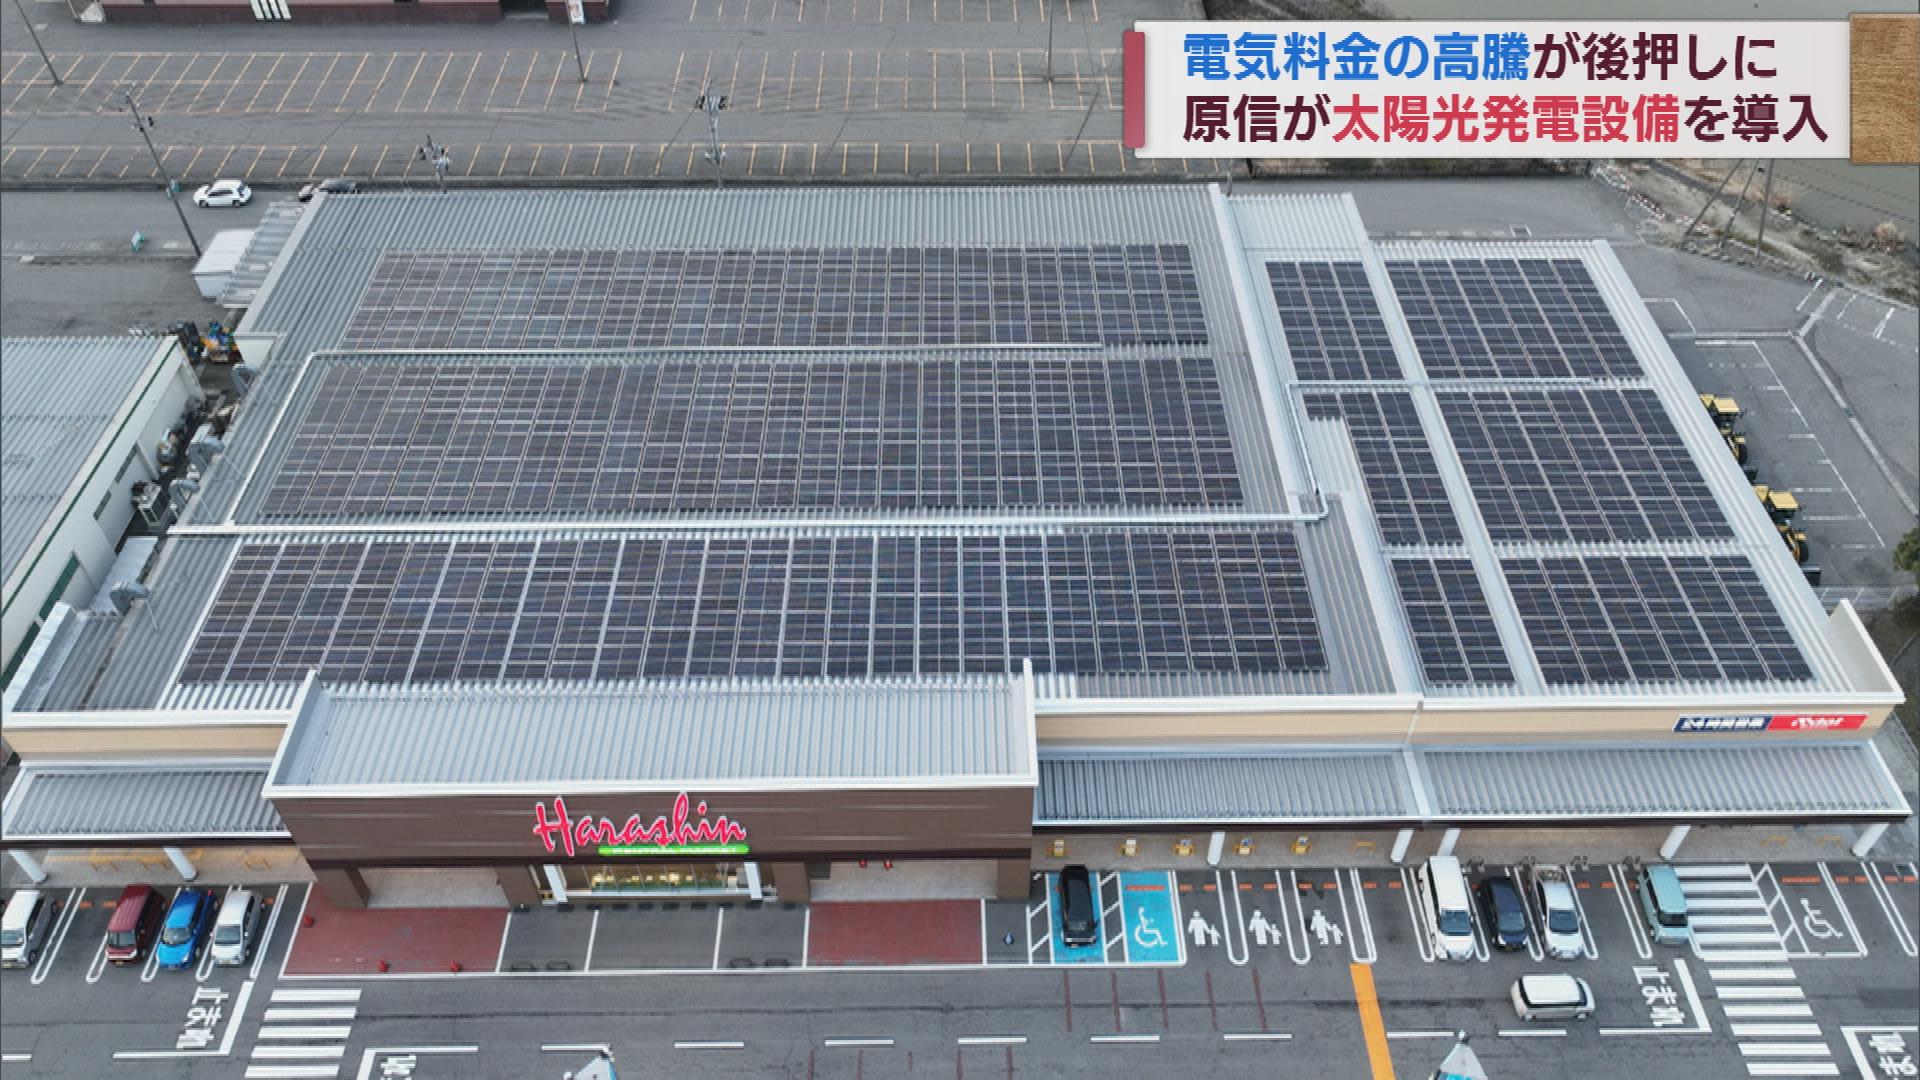 【SDGs】店舗に太陽光発電を設置 年間約1508tのCO2を削減も【新潟】